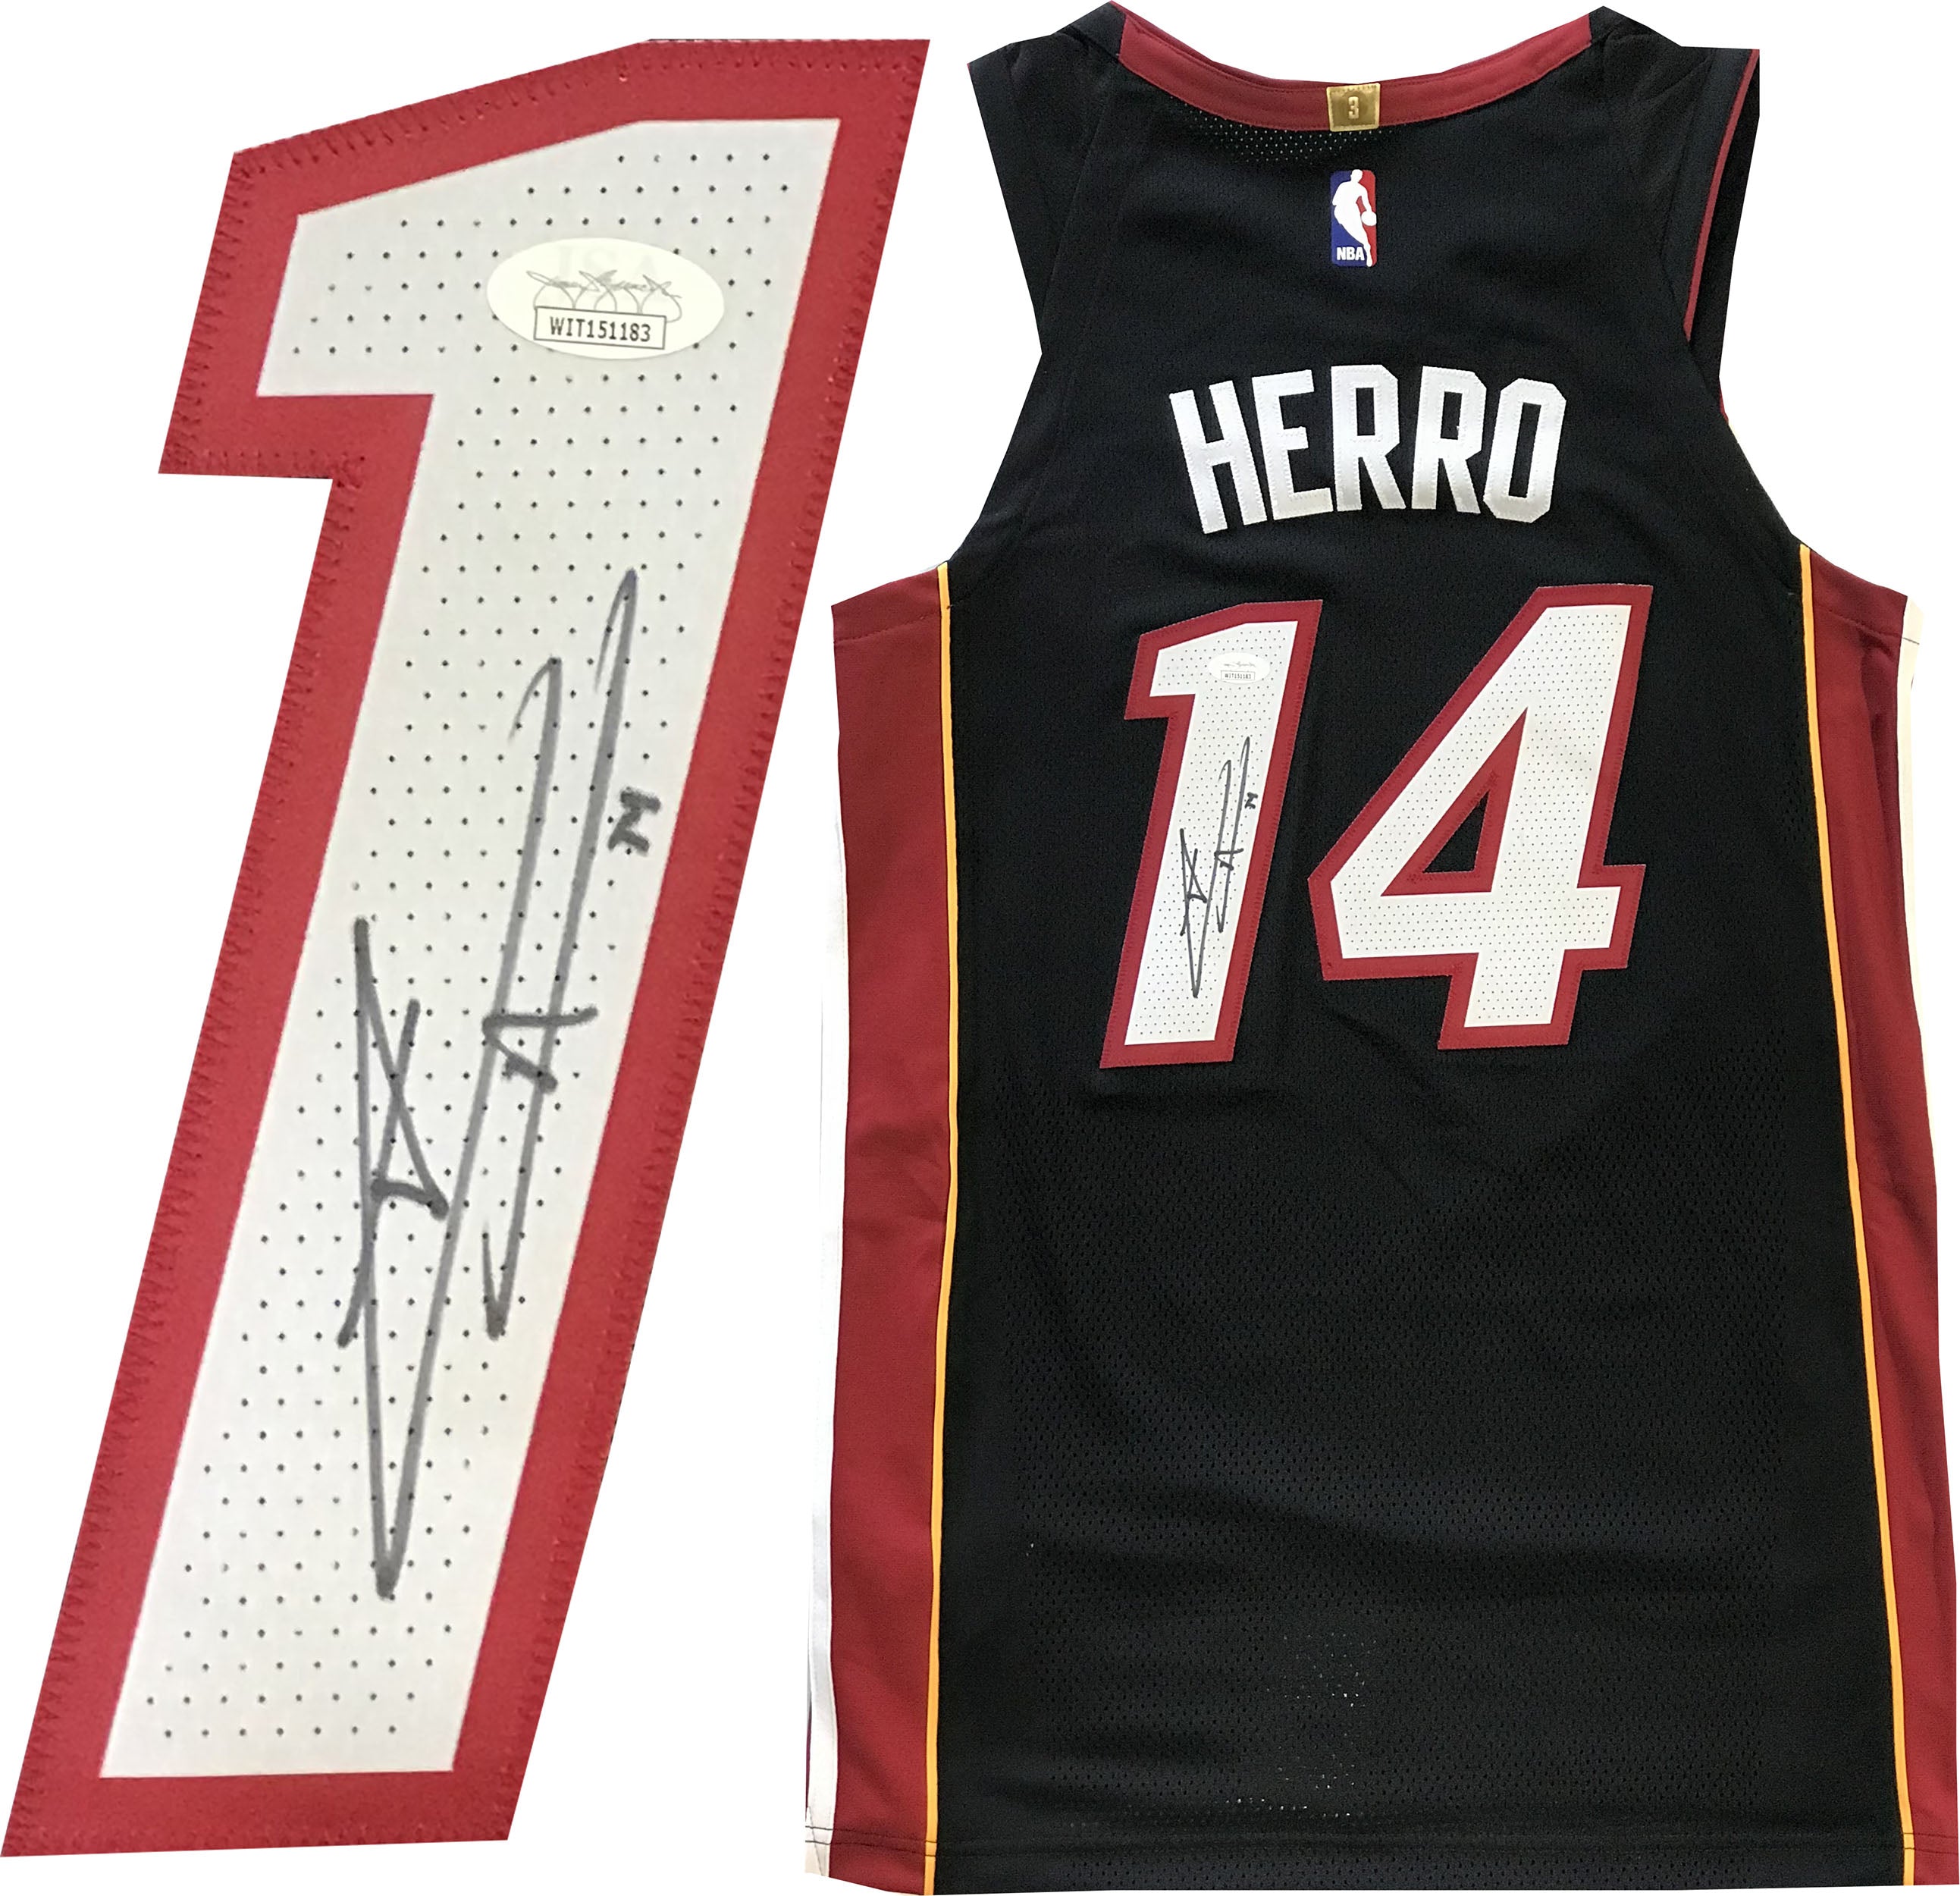 Tyler Herro Boy Wonder Autographed Miami Heat Vice Versa Swingman Jersey  (JSA)